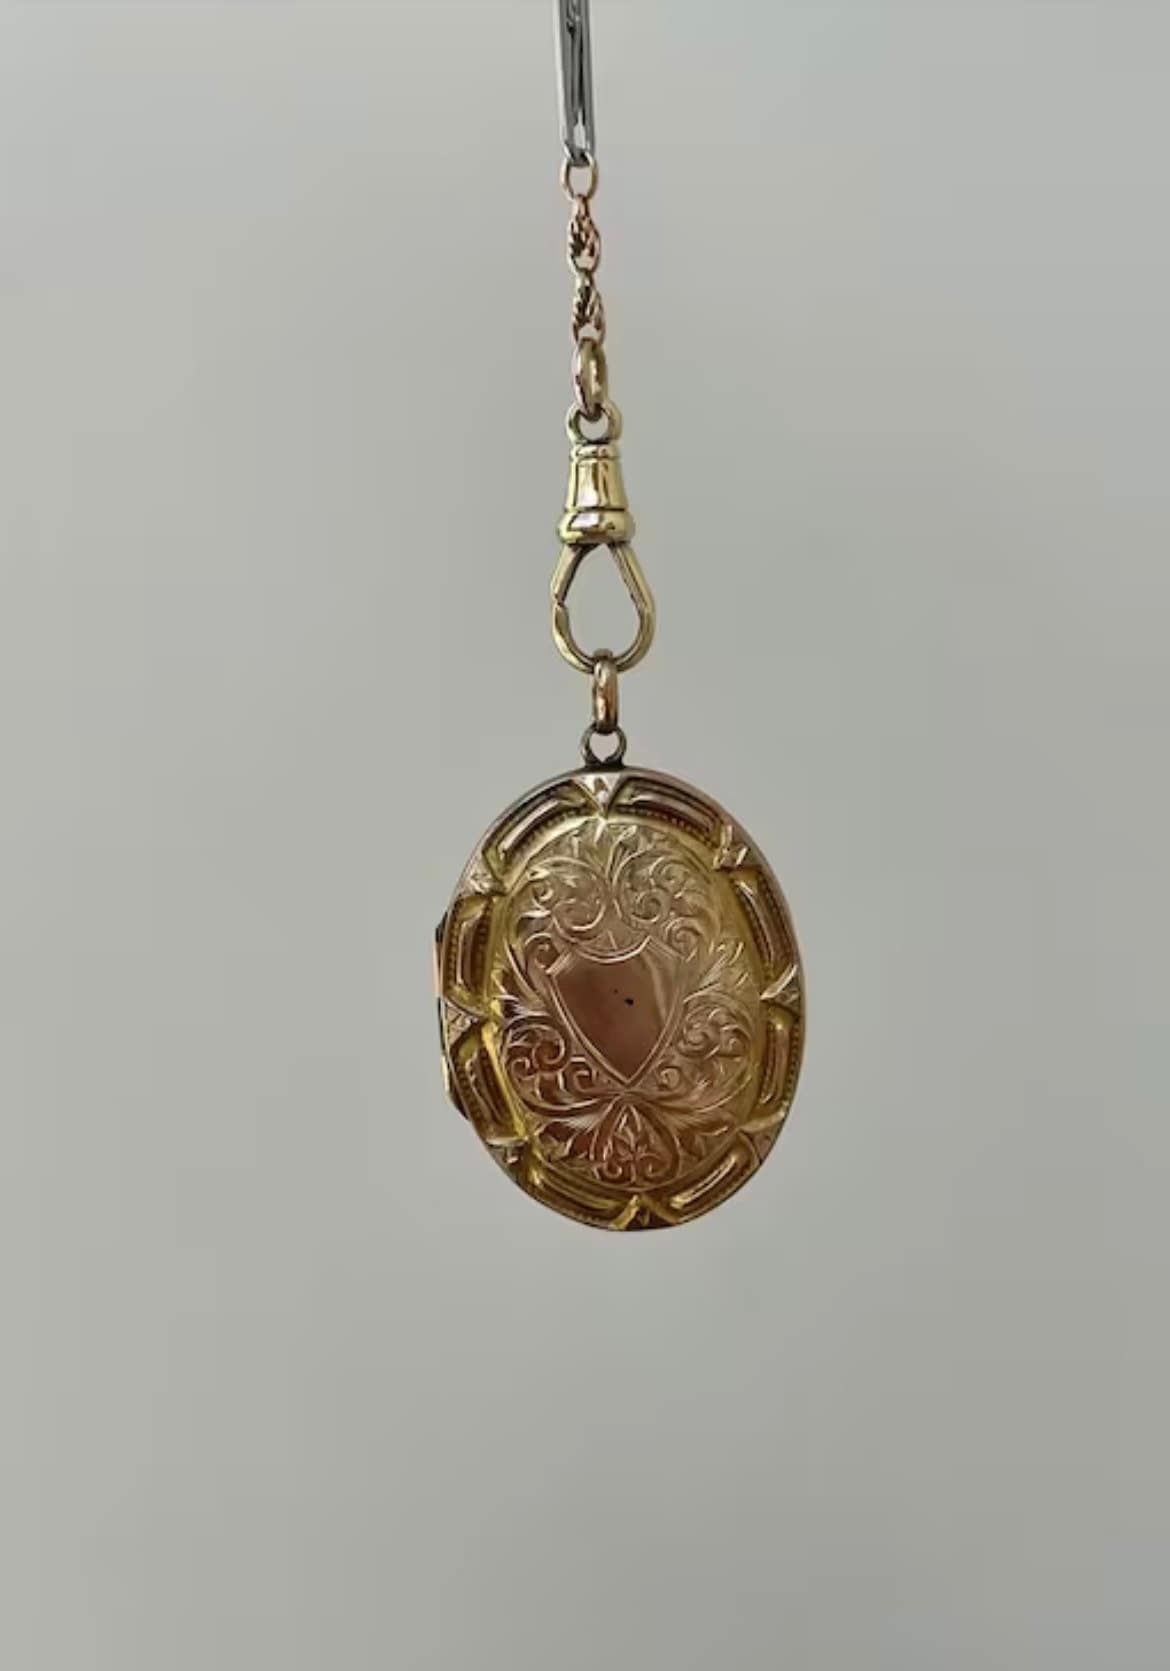 Antique large silver locket pendant with floral details — Gembank1973